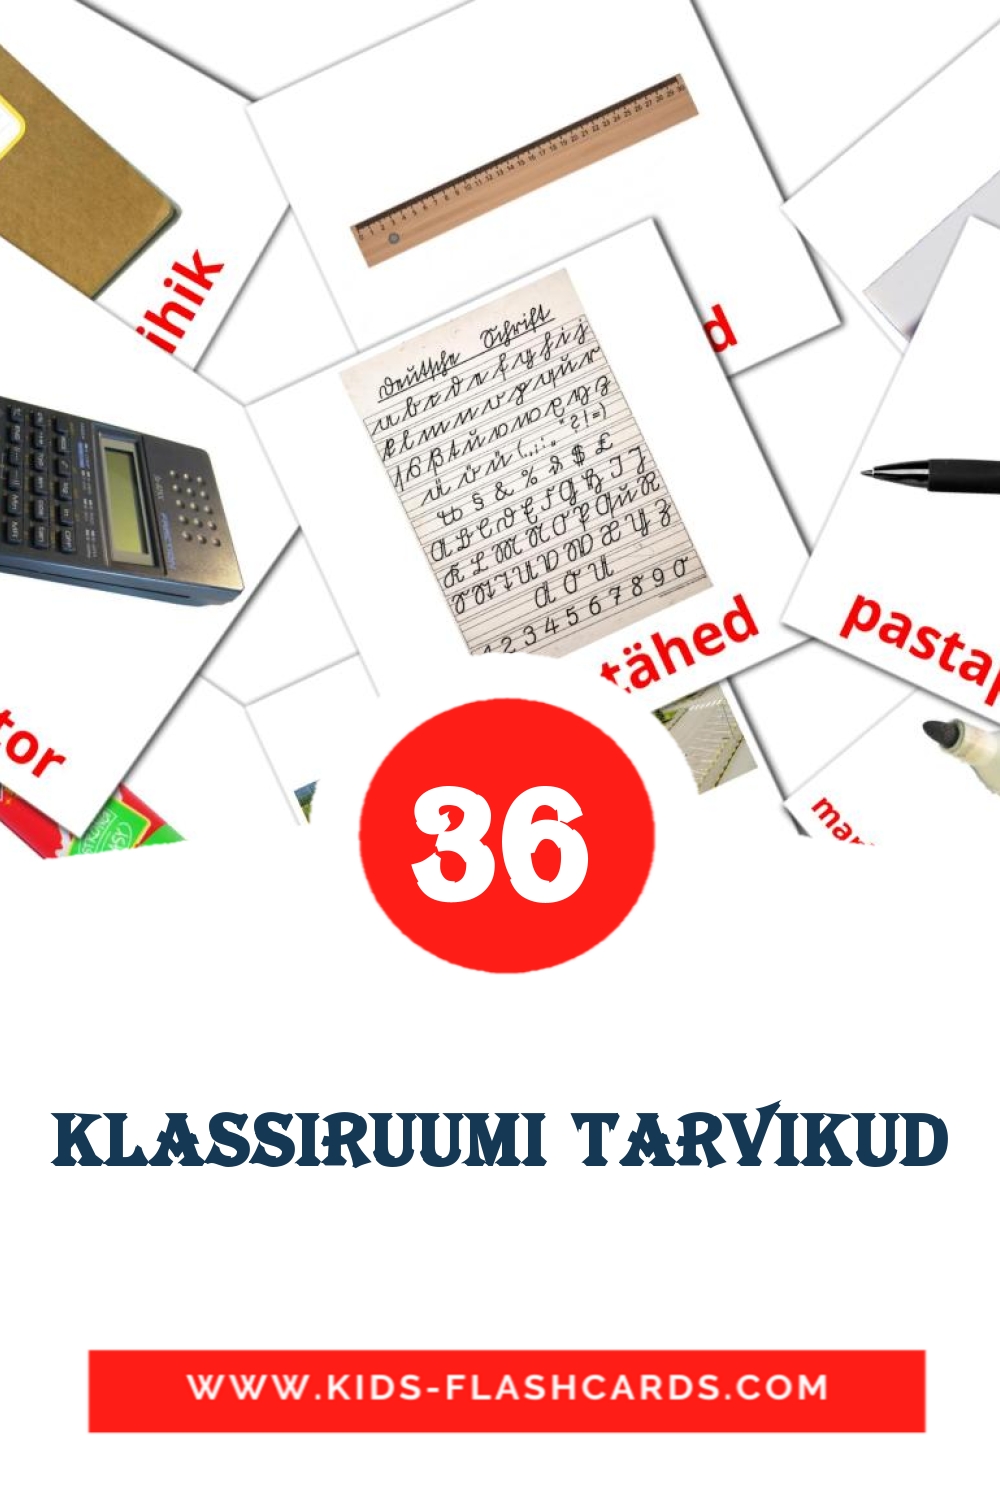 36 Klassiruumi tarvikud Picture Cards for Kindergarden in estonian